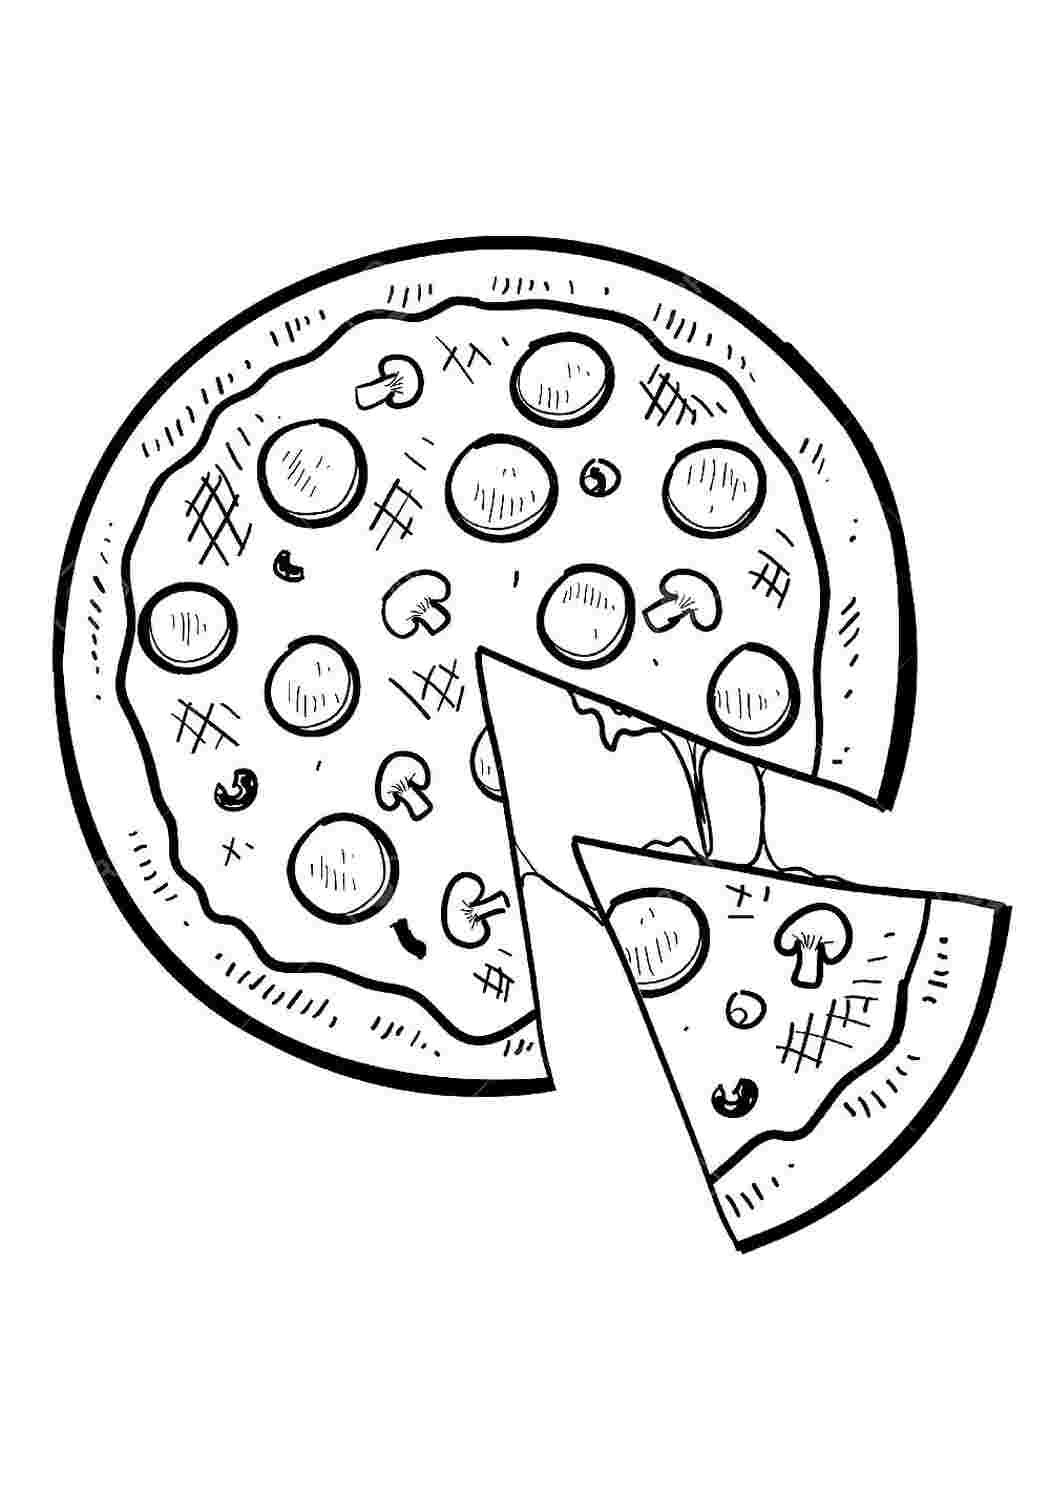 Пицца черно белая. Пицца раскраска для детей. Пицца трафарет. Пицца для рисования черно белая. Пицца для распечатки.